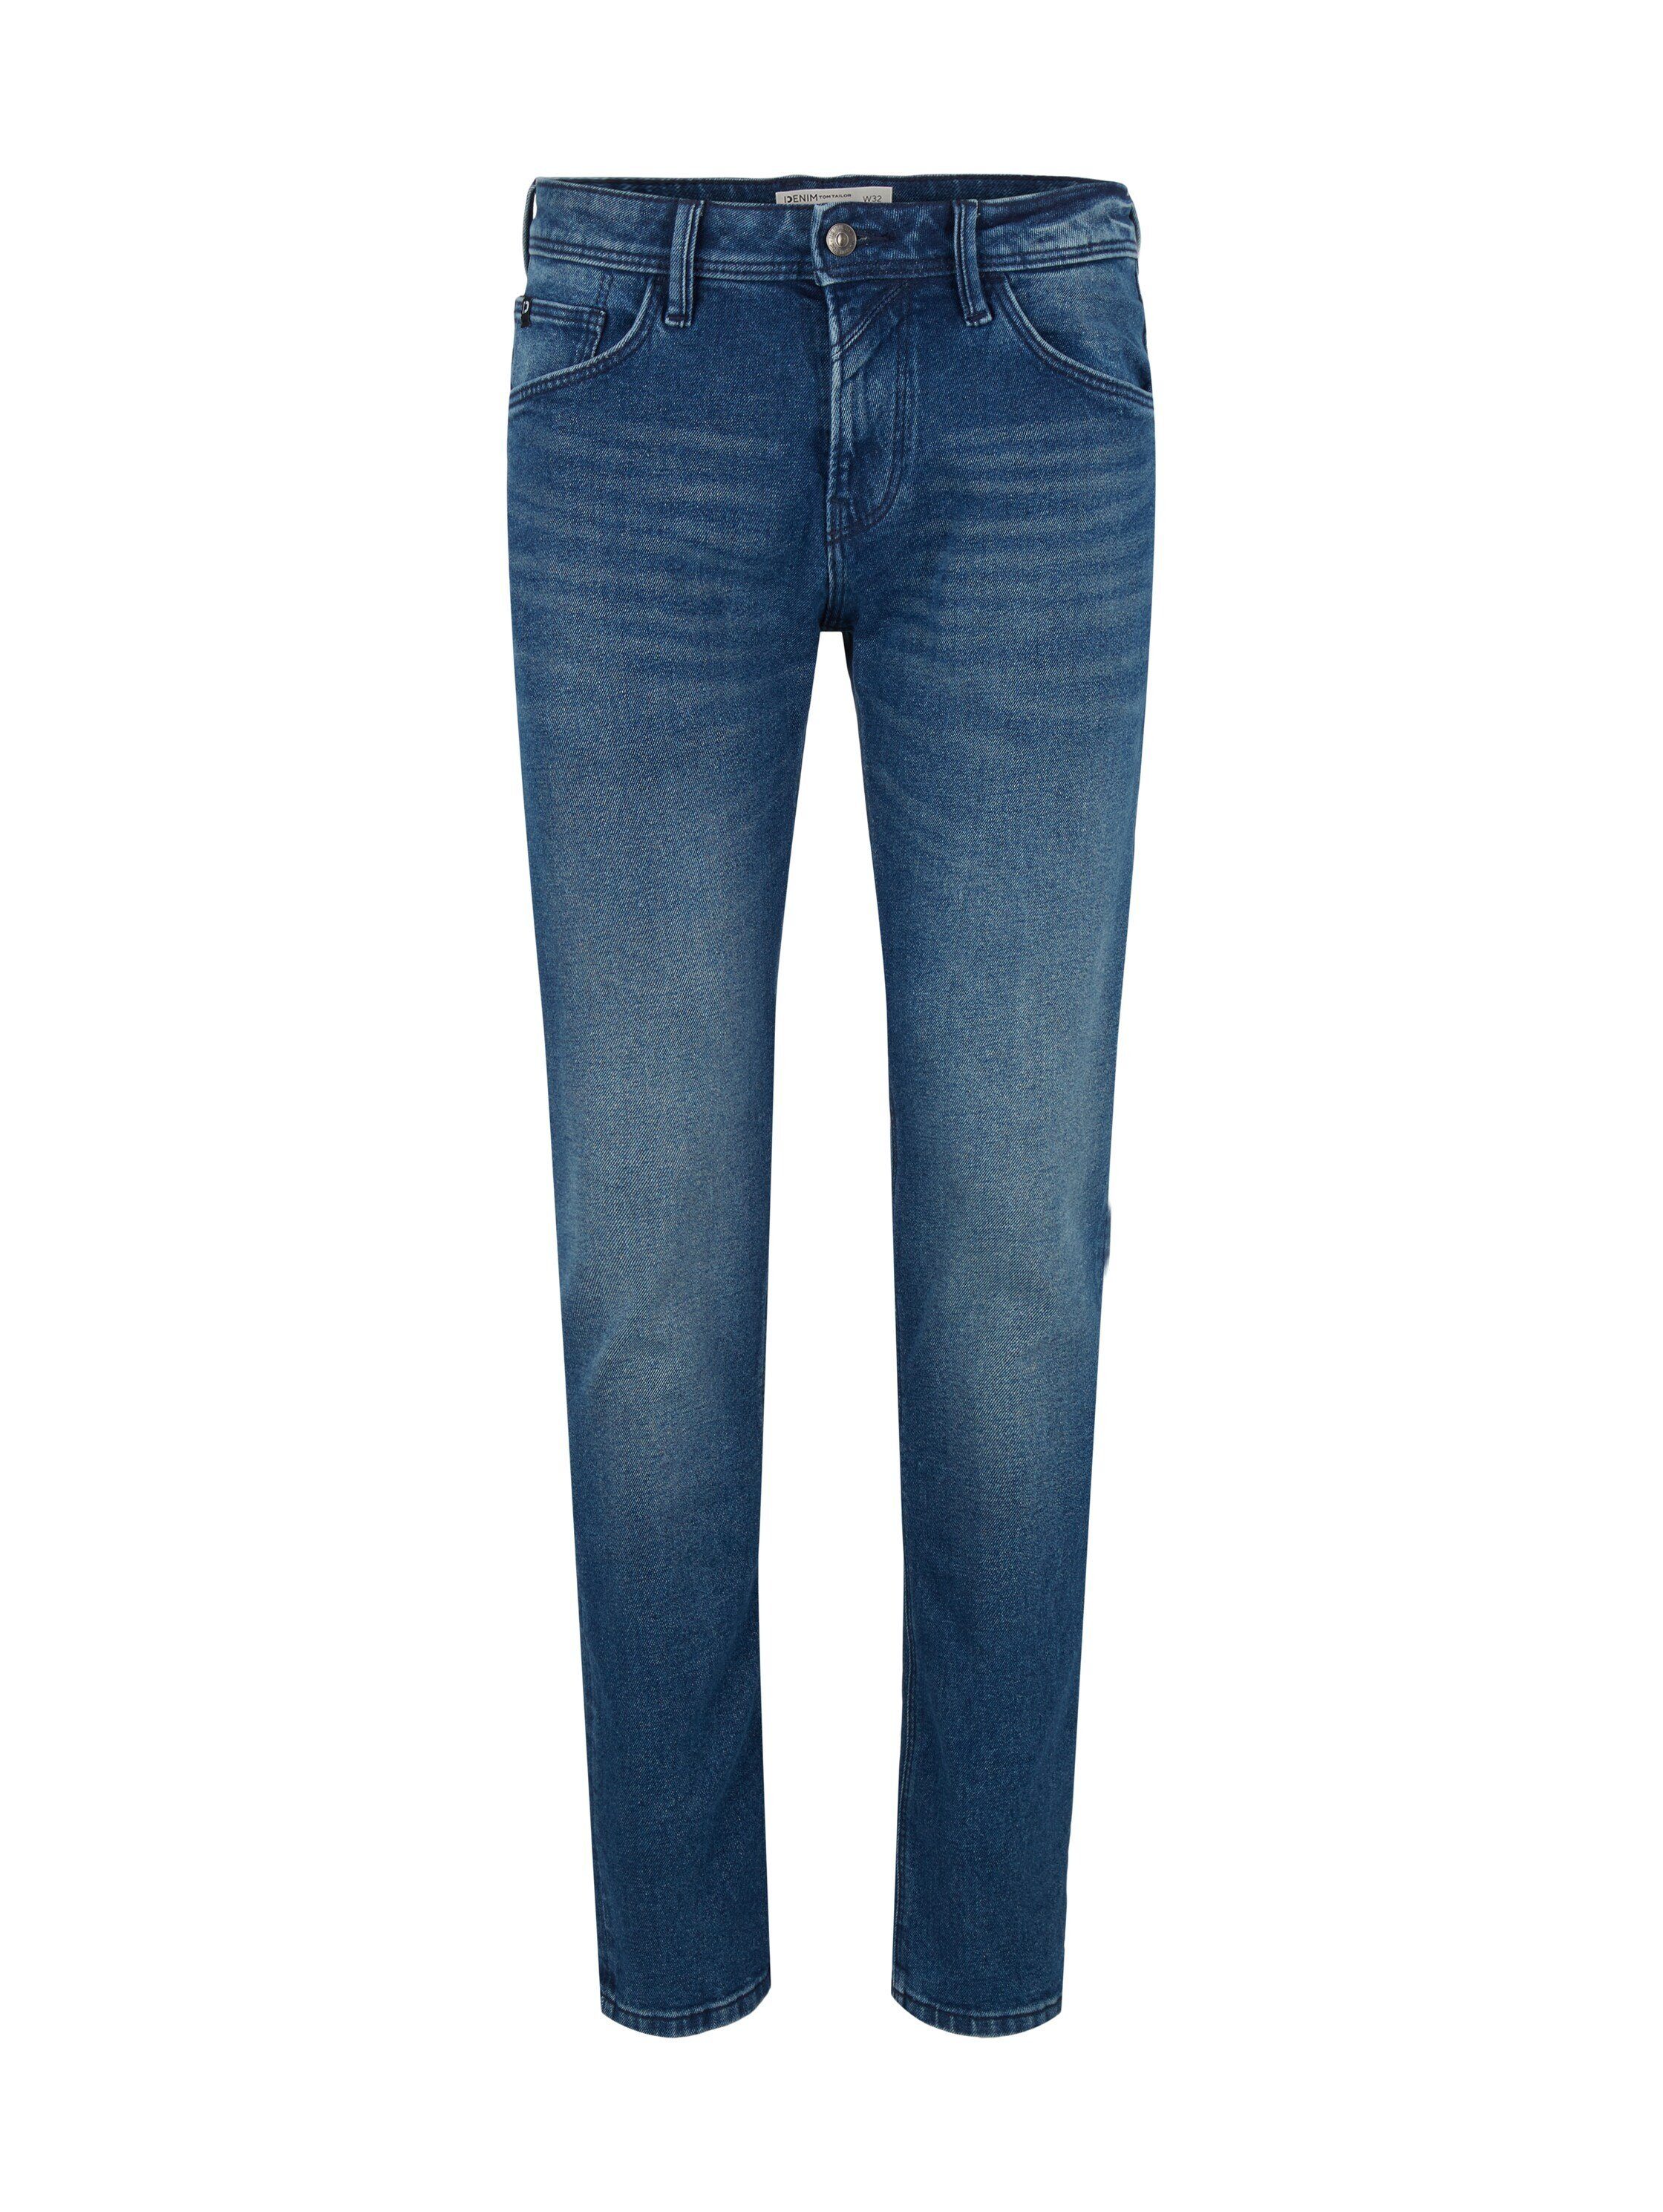 TOM TAILOR 5-Pocket-Jeans Hose Piers Slim Jeans mit leichter Waschung im